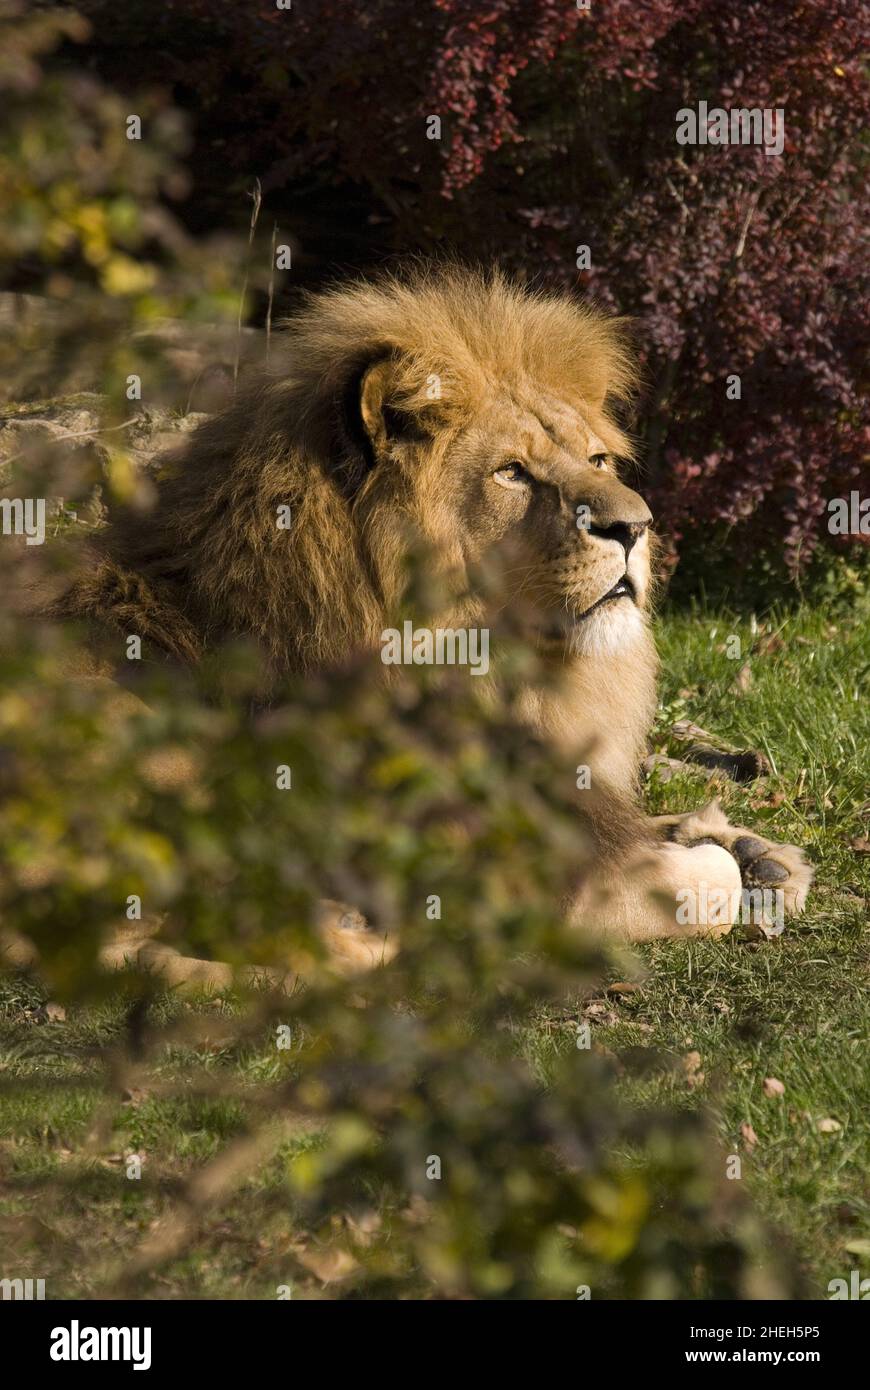 Katanga Lion - Panthera leo bleyenberghi, iconic animal from African savannas, Kalahari, Botswana. Stock Photo